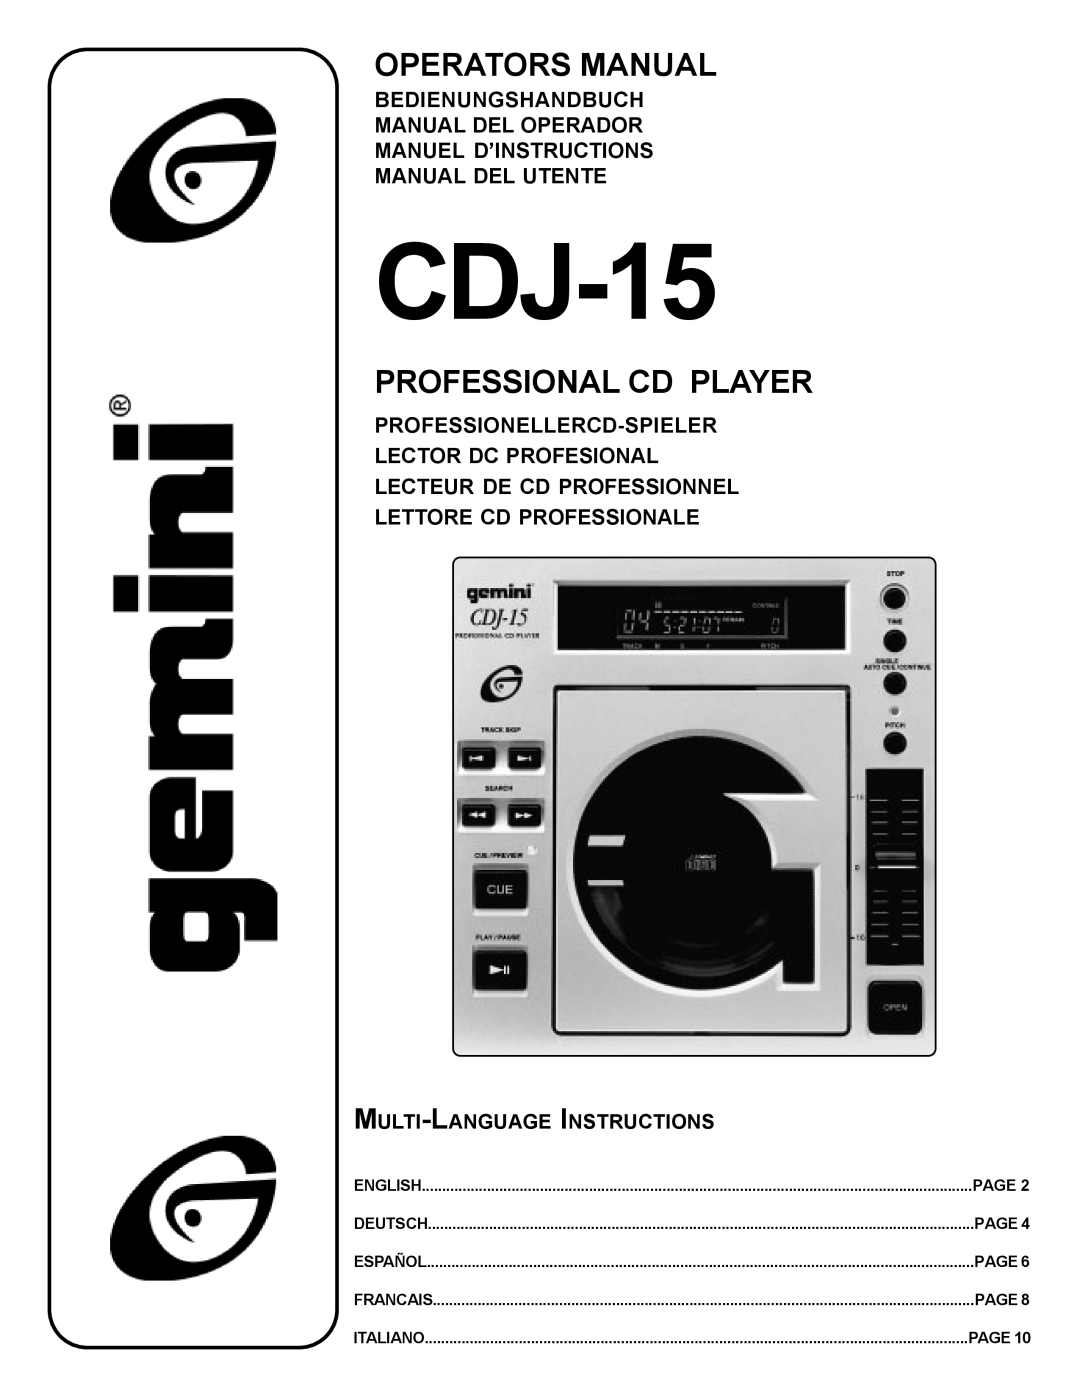 Gemini CDJ-15 manual Bedienungshandbuch Manual Del Operador, Manuel D’Instructions Manual Del Utente, Operators Manual 